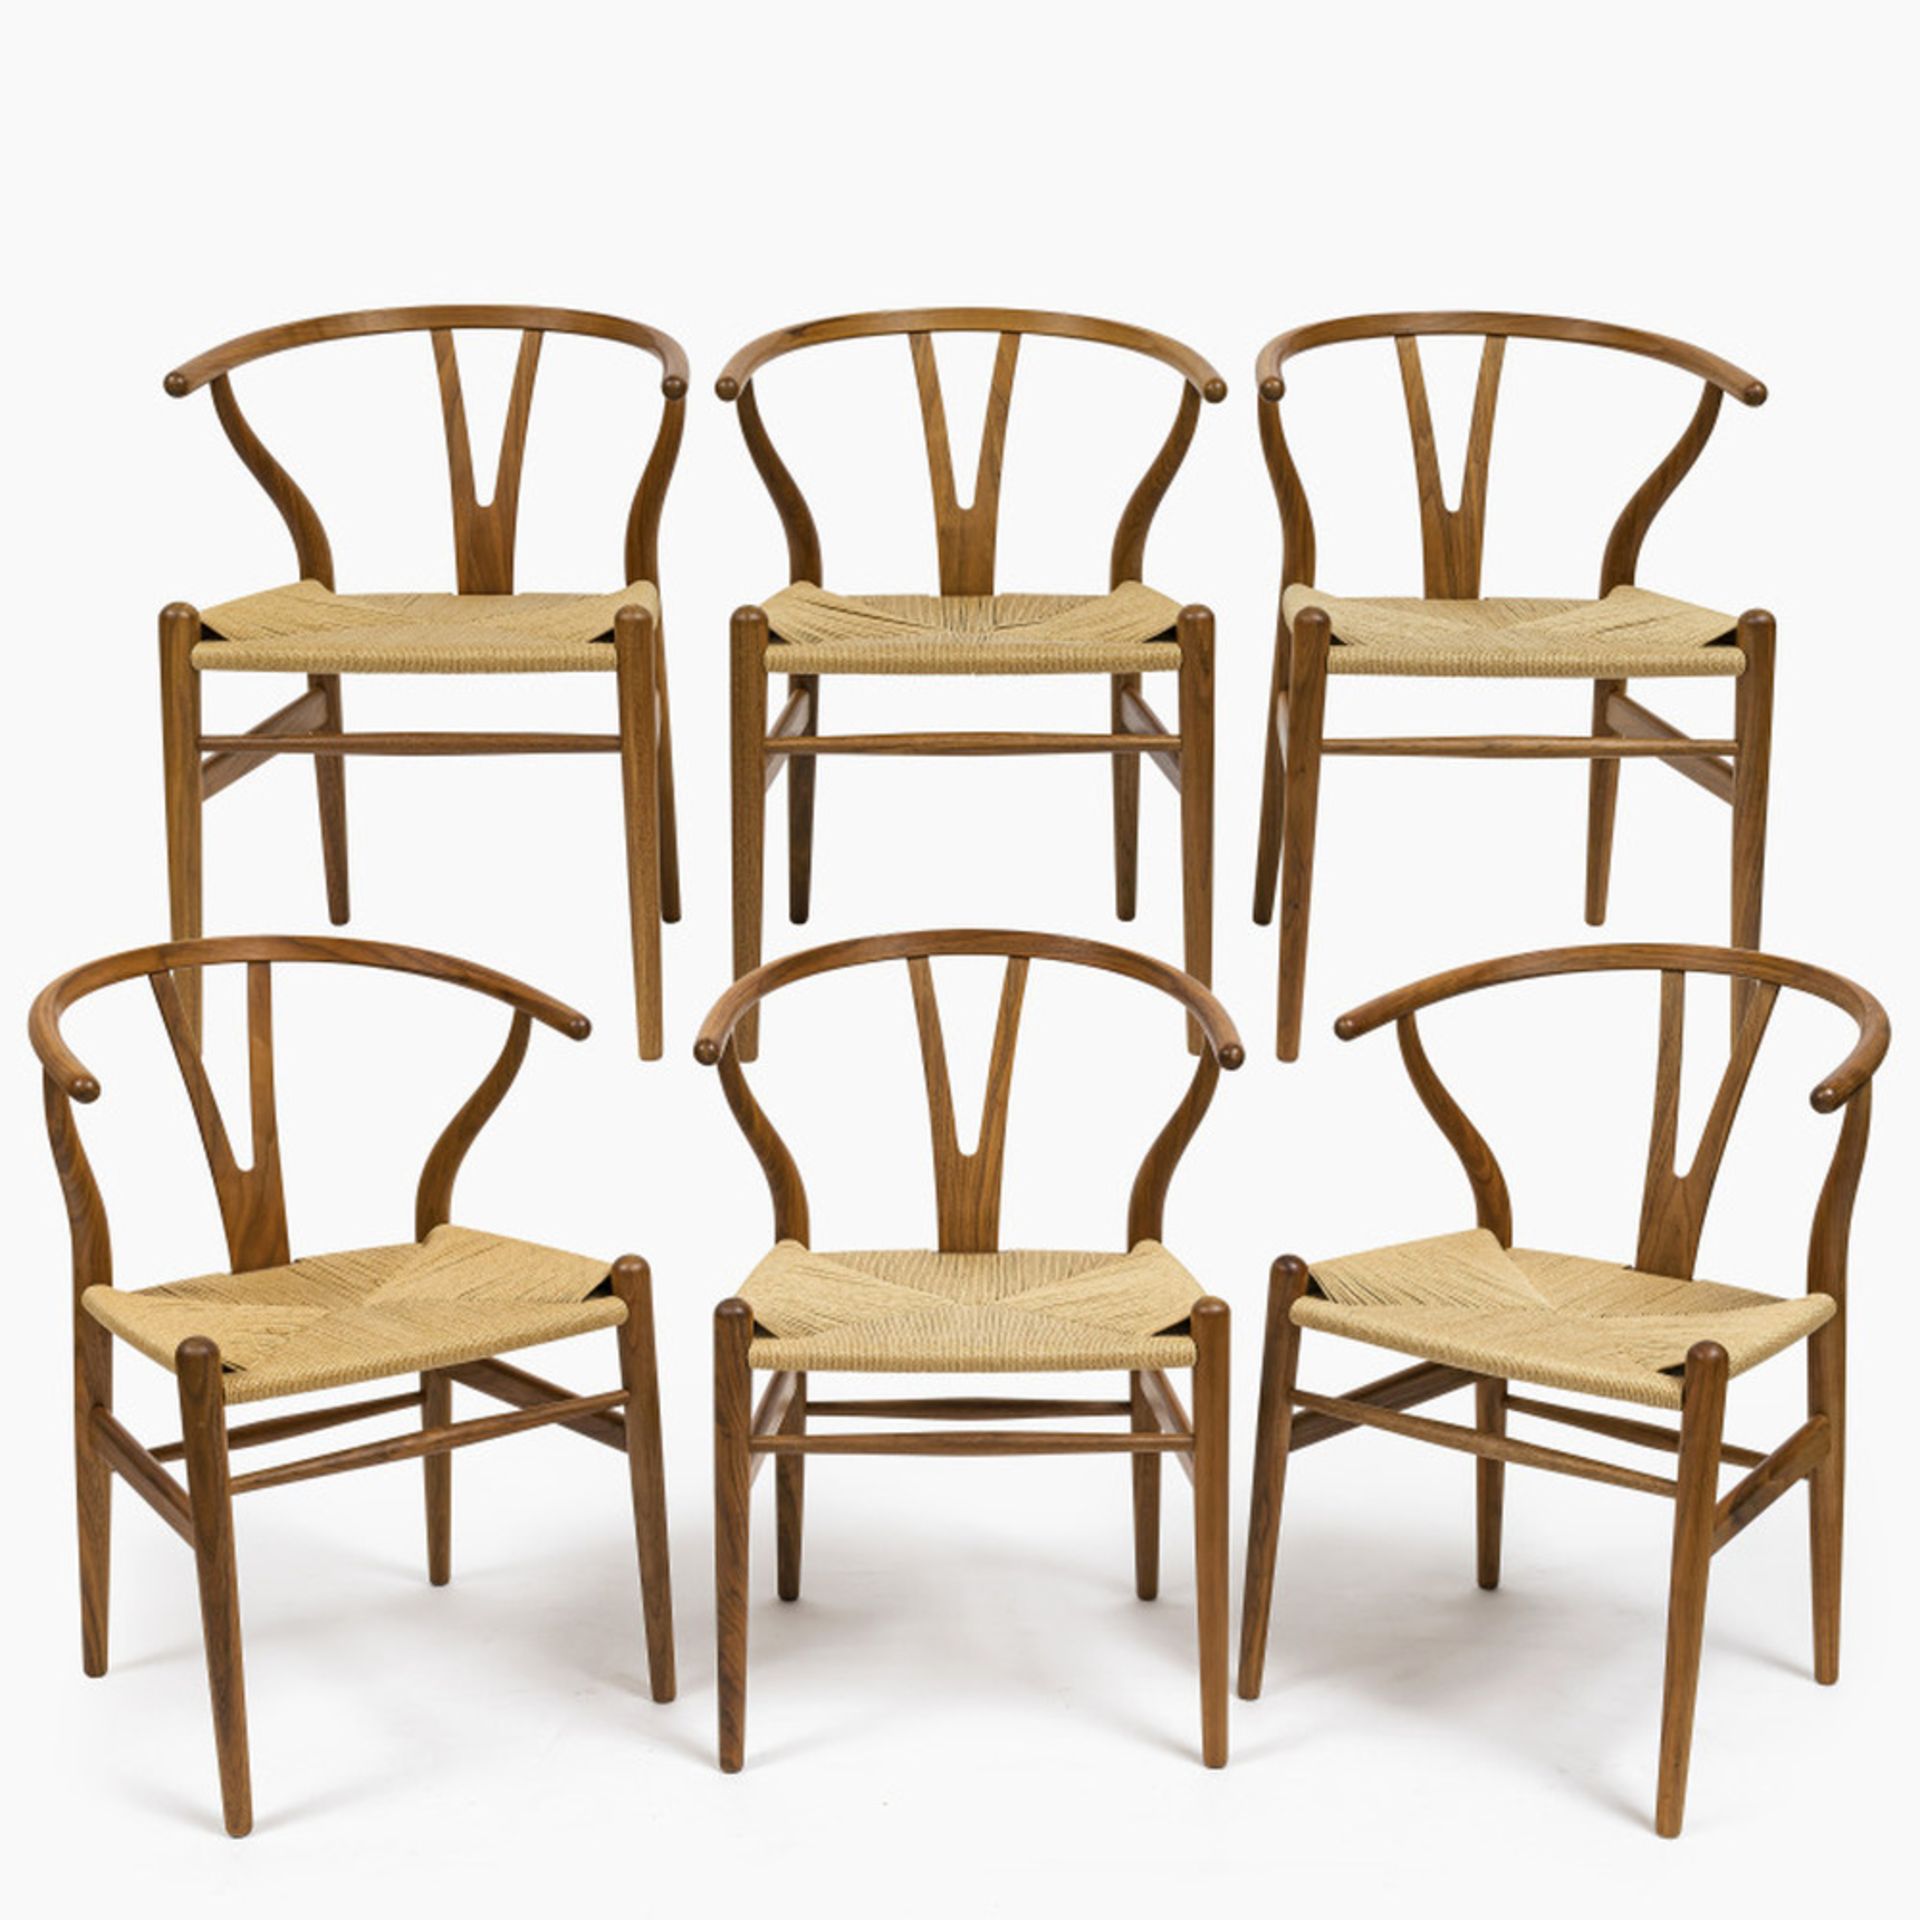 Six CH 24 armchairs (Wishbone chairs) - Design by Hans J.Wegner for Carl Hansen & Sohn, Denmark